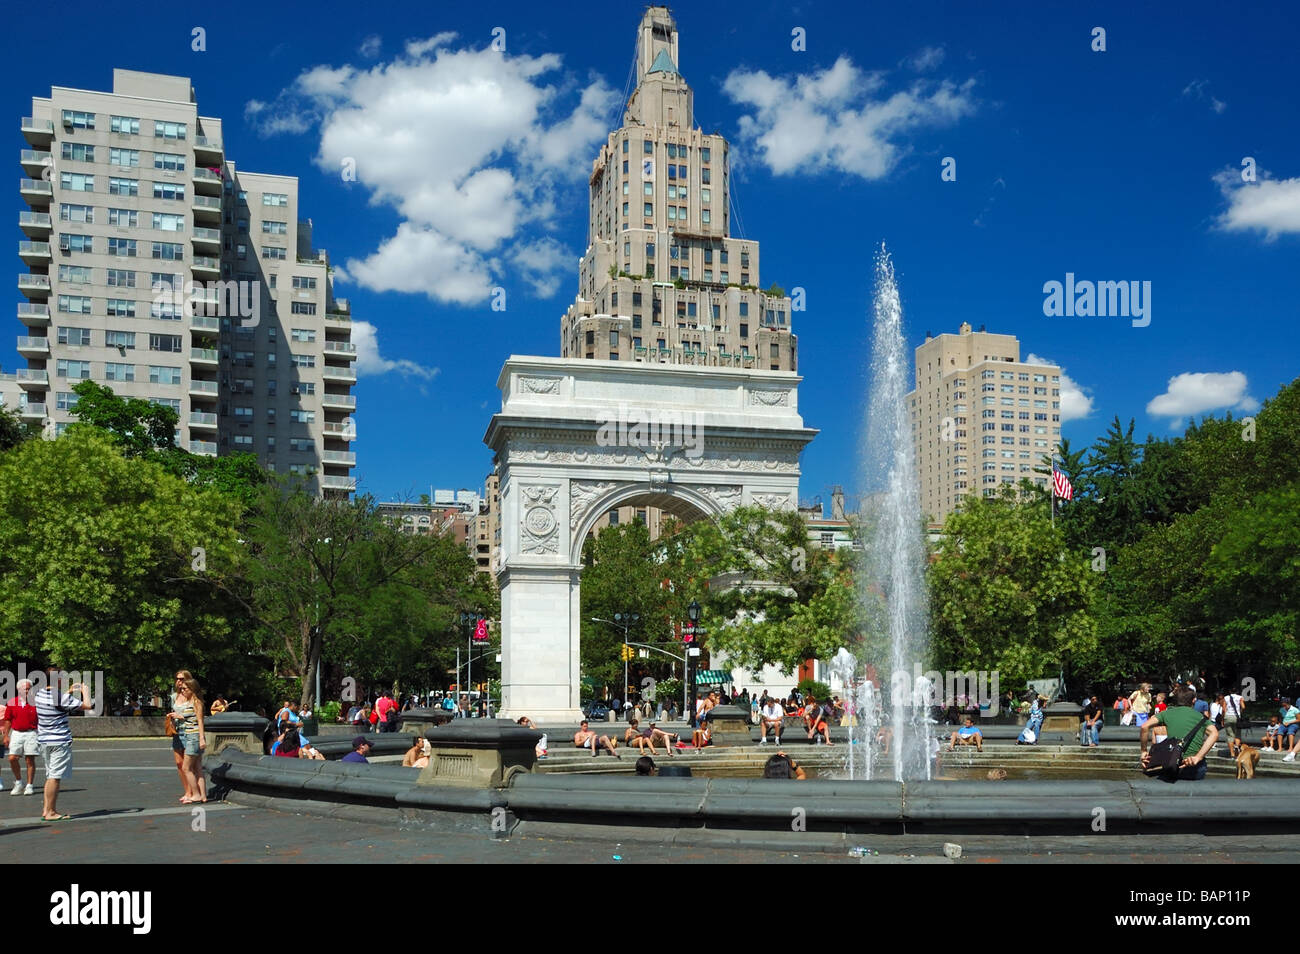 Washington Square Arch and 1 Fifth Avenue Building, Washington Square Park, Greenwich Village, Manhattan, New York City, USA. Stock Photo